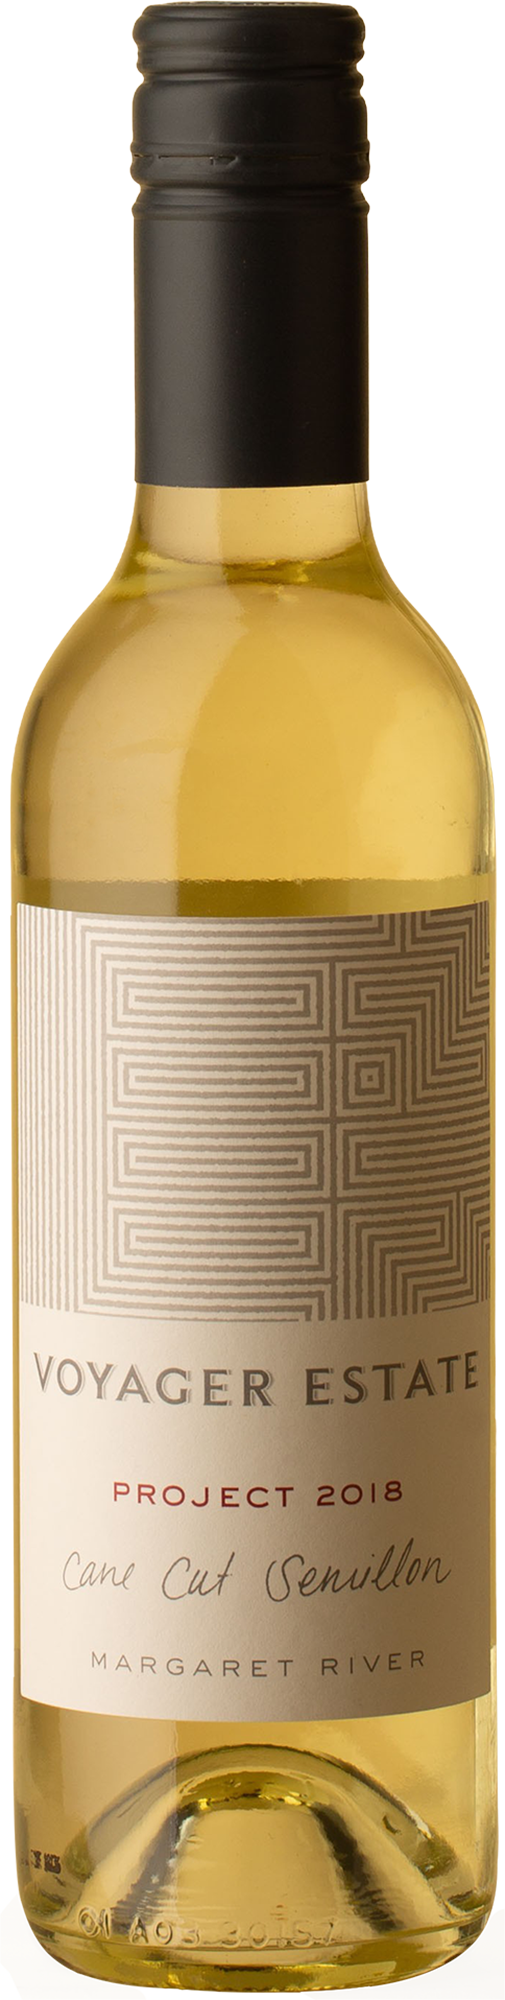 Voyager Estate - Cane Cut Semillon 375mL 2018 White Wine